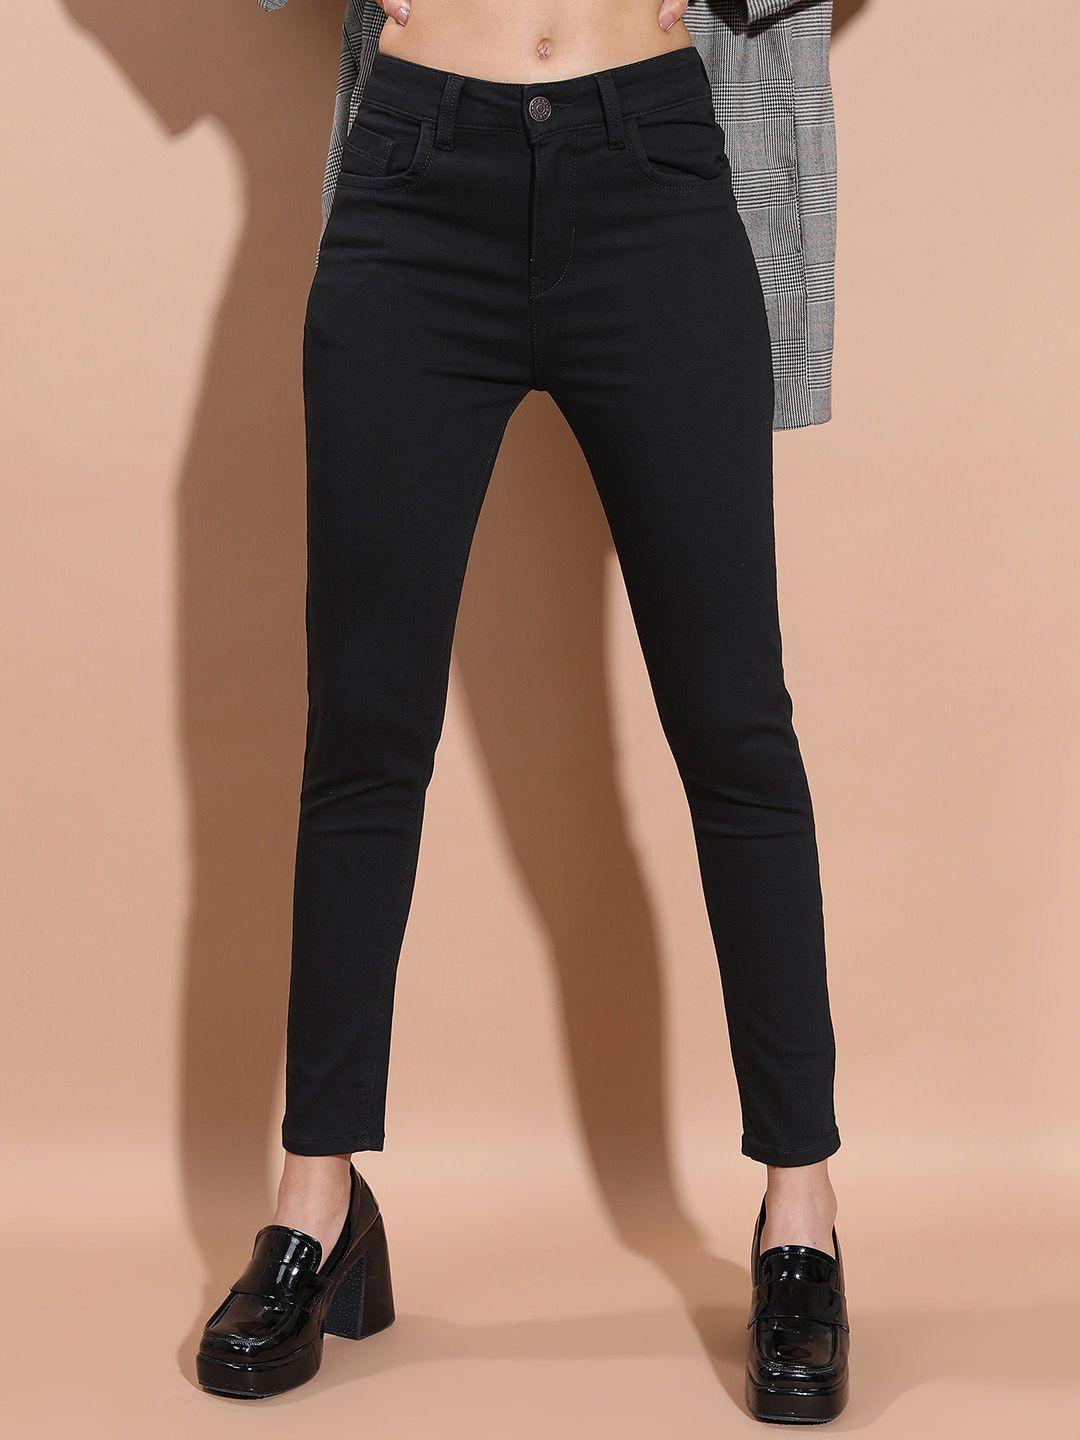 tokyo talkies women mid-rise slim fit clean look stretchable jeans